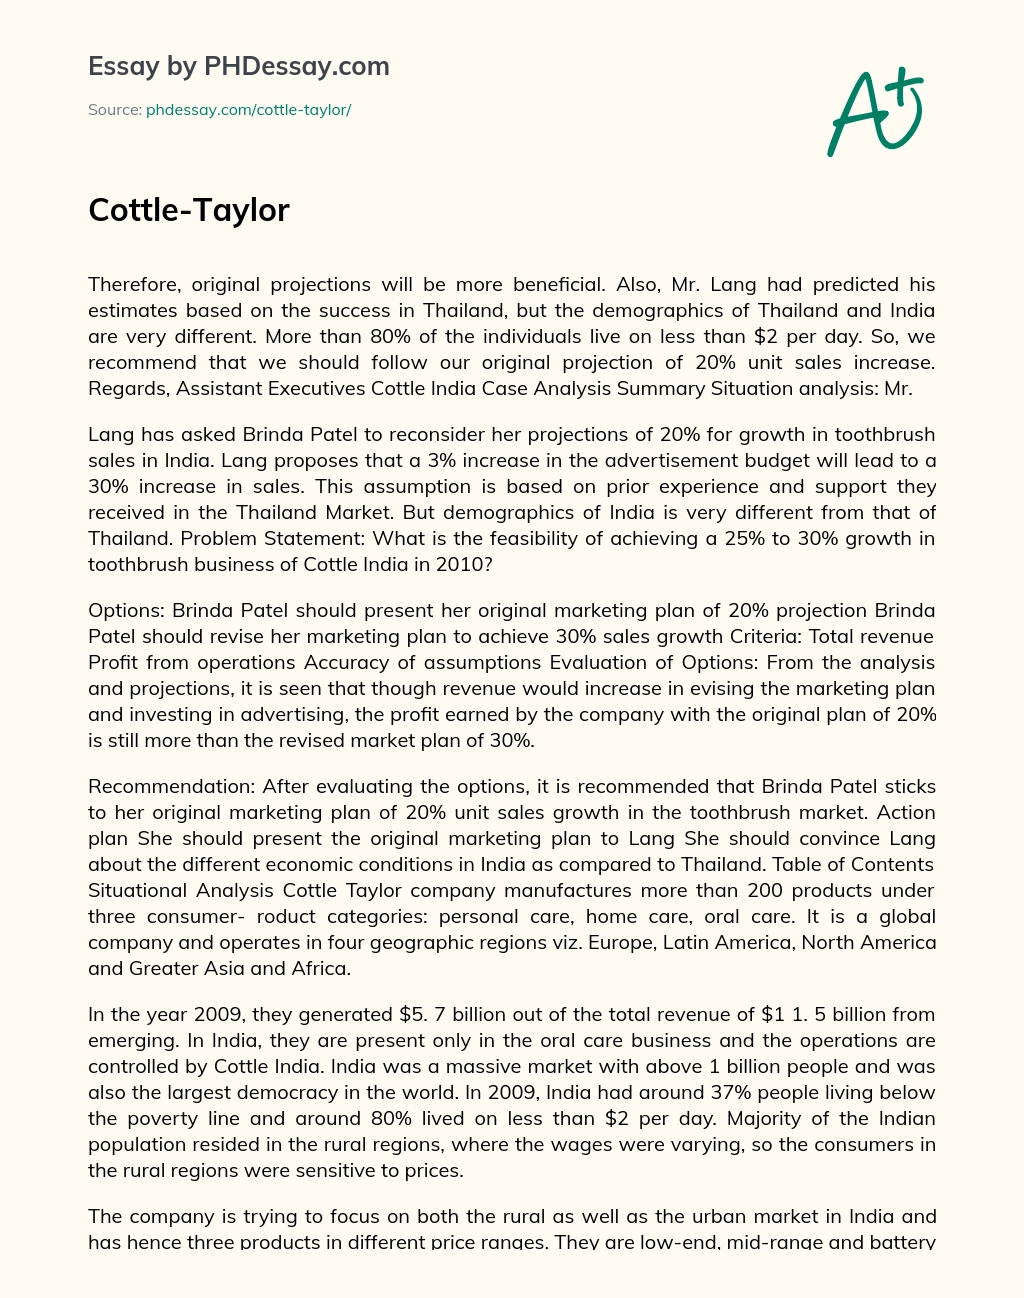 Cottle-Taylor essay